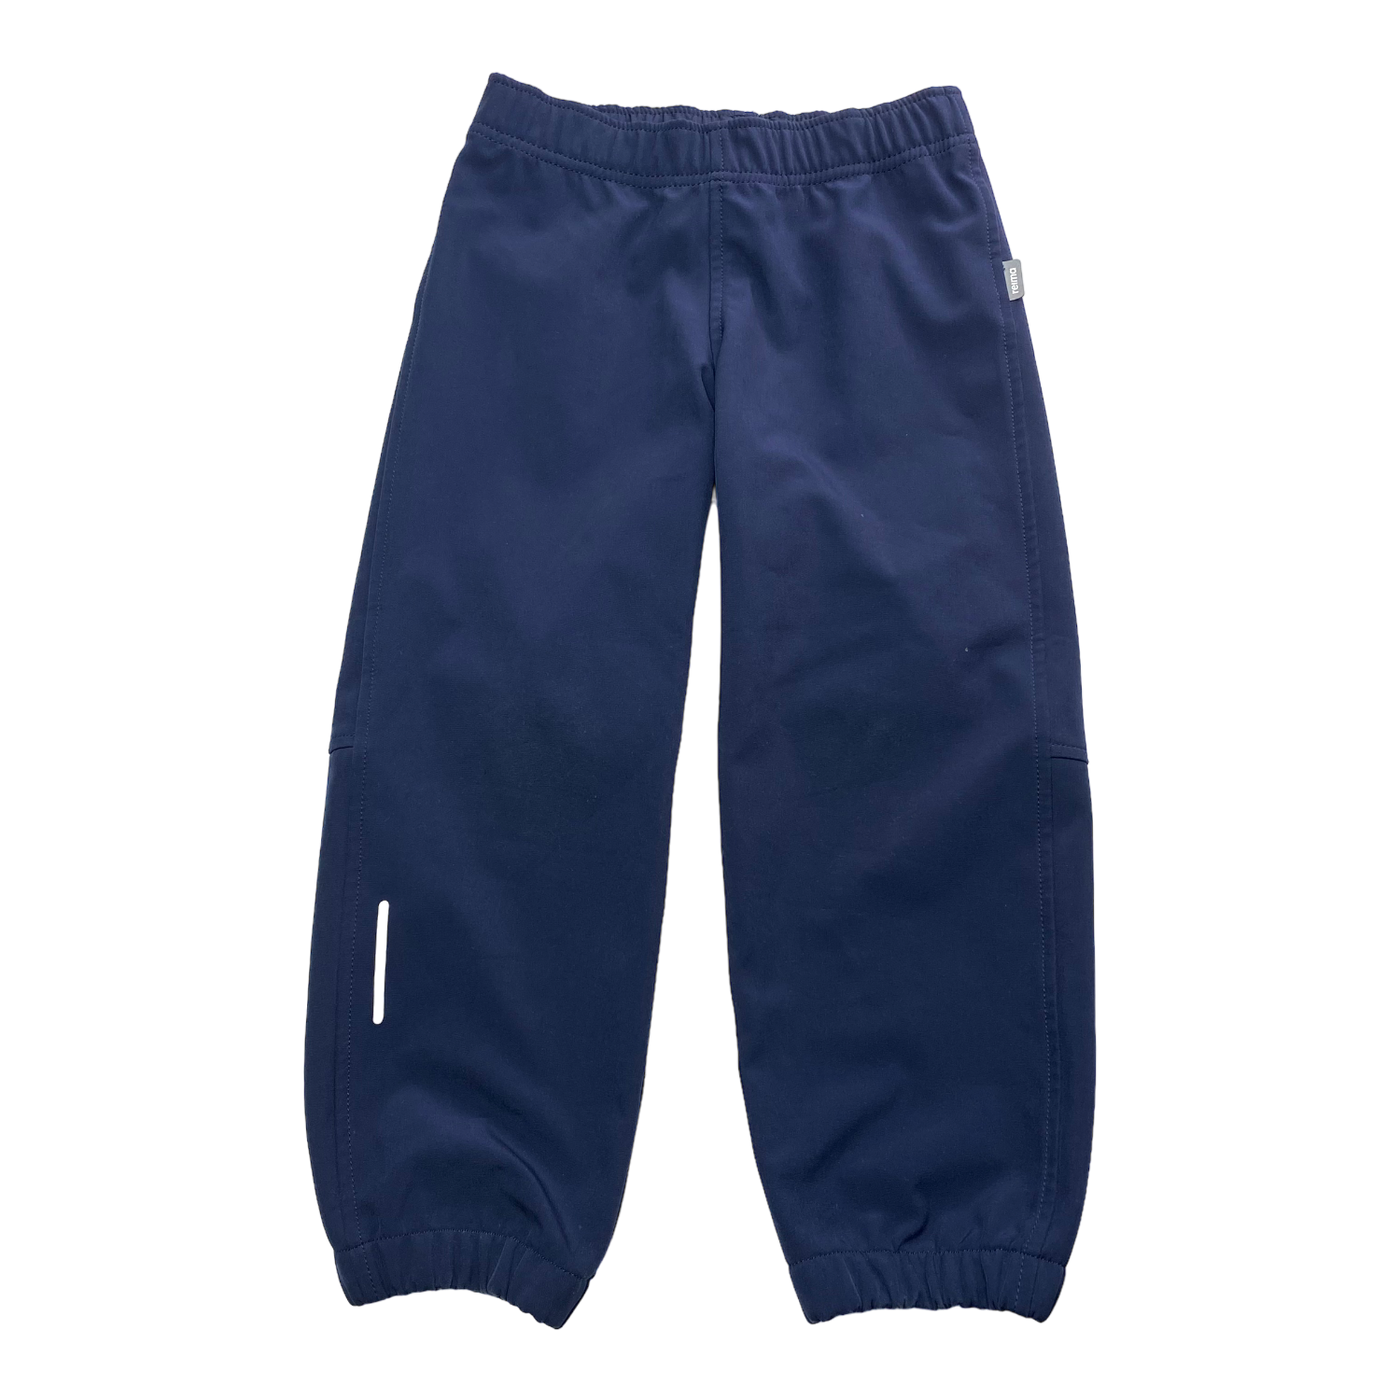 Reima soft shell pants, dark blue | 110cm